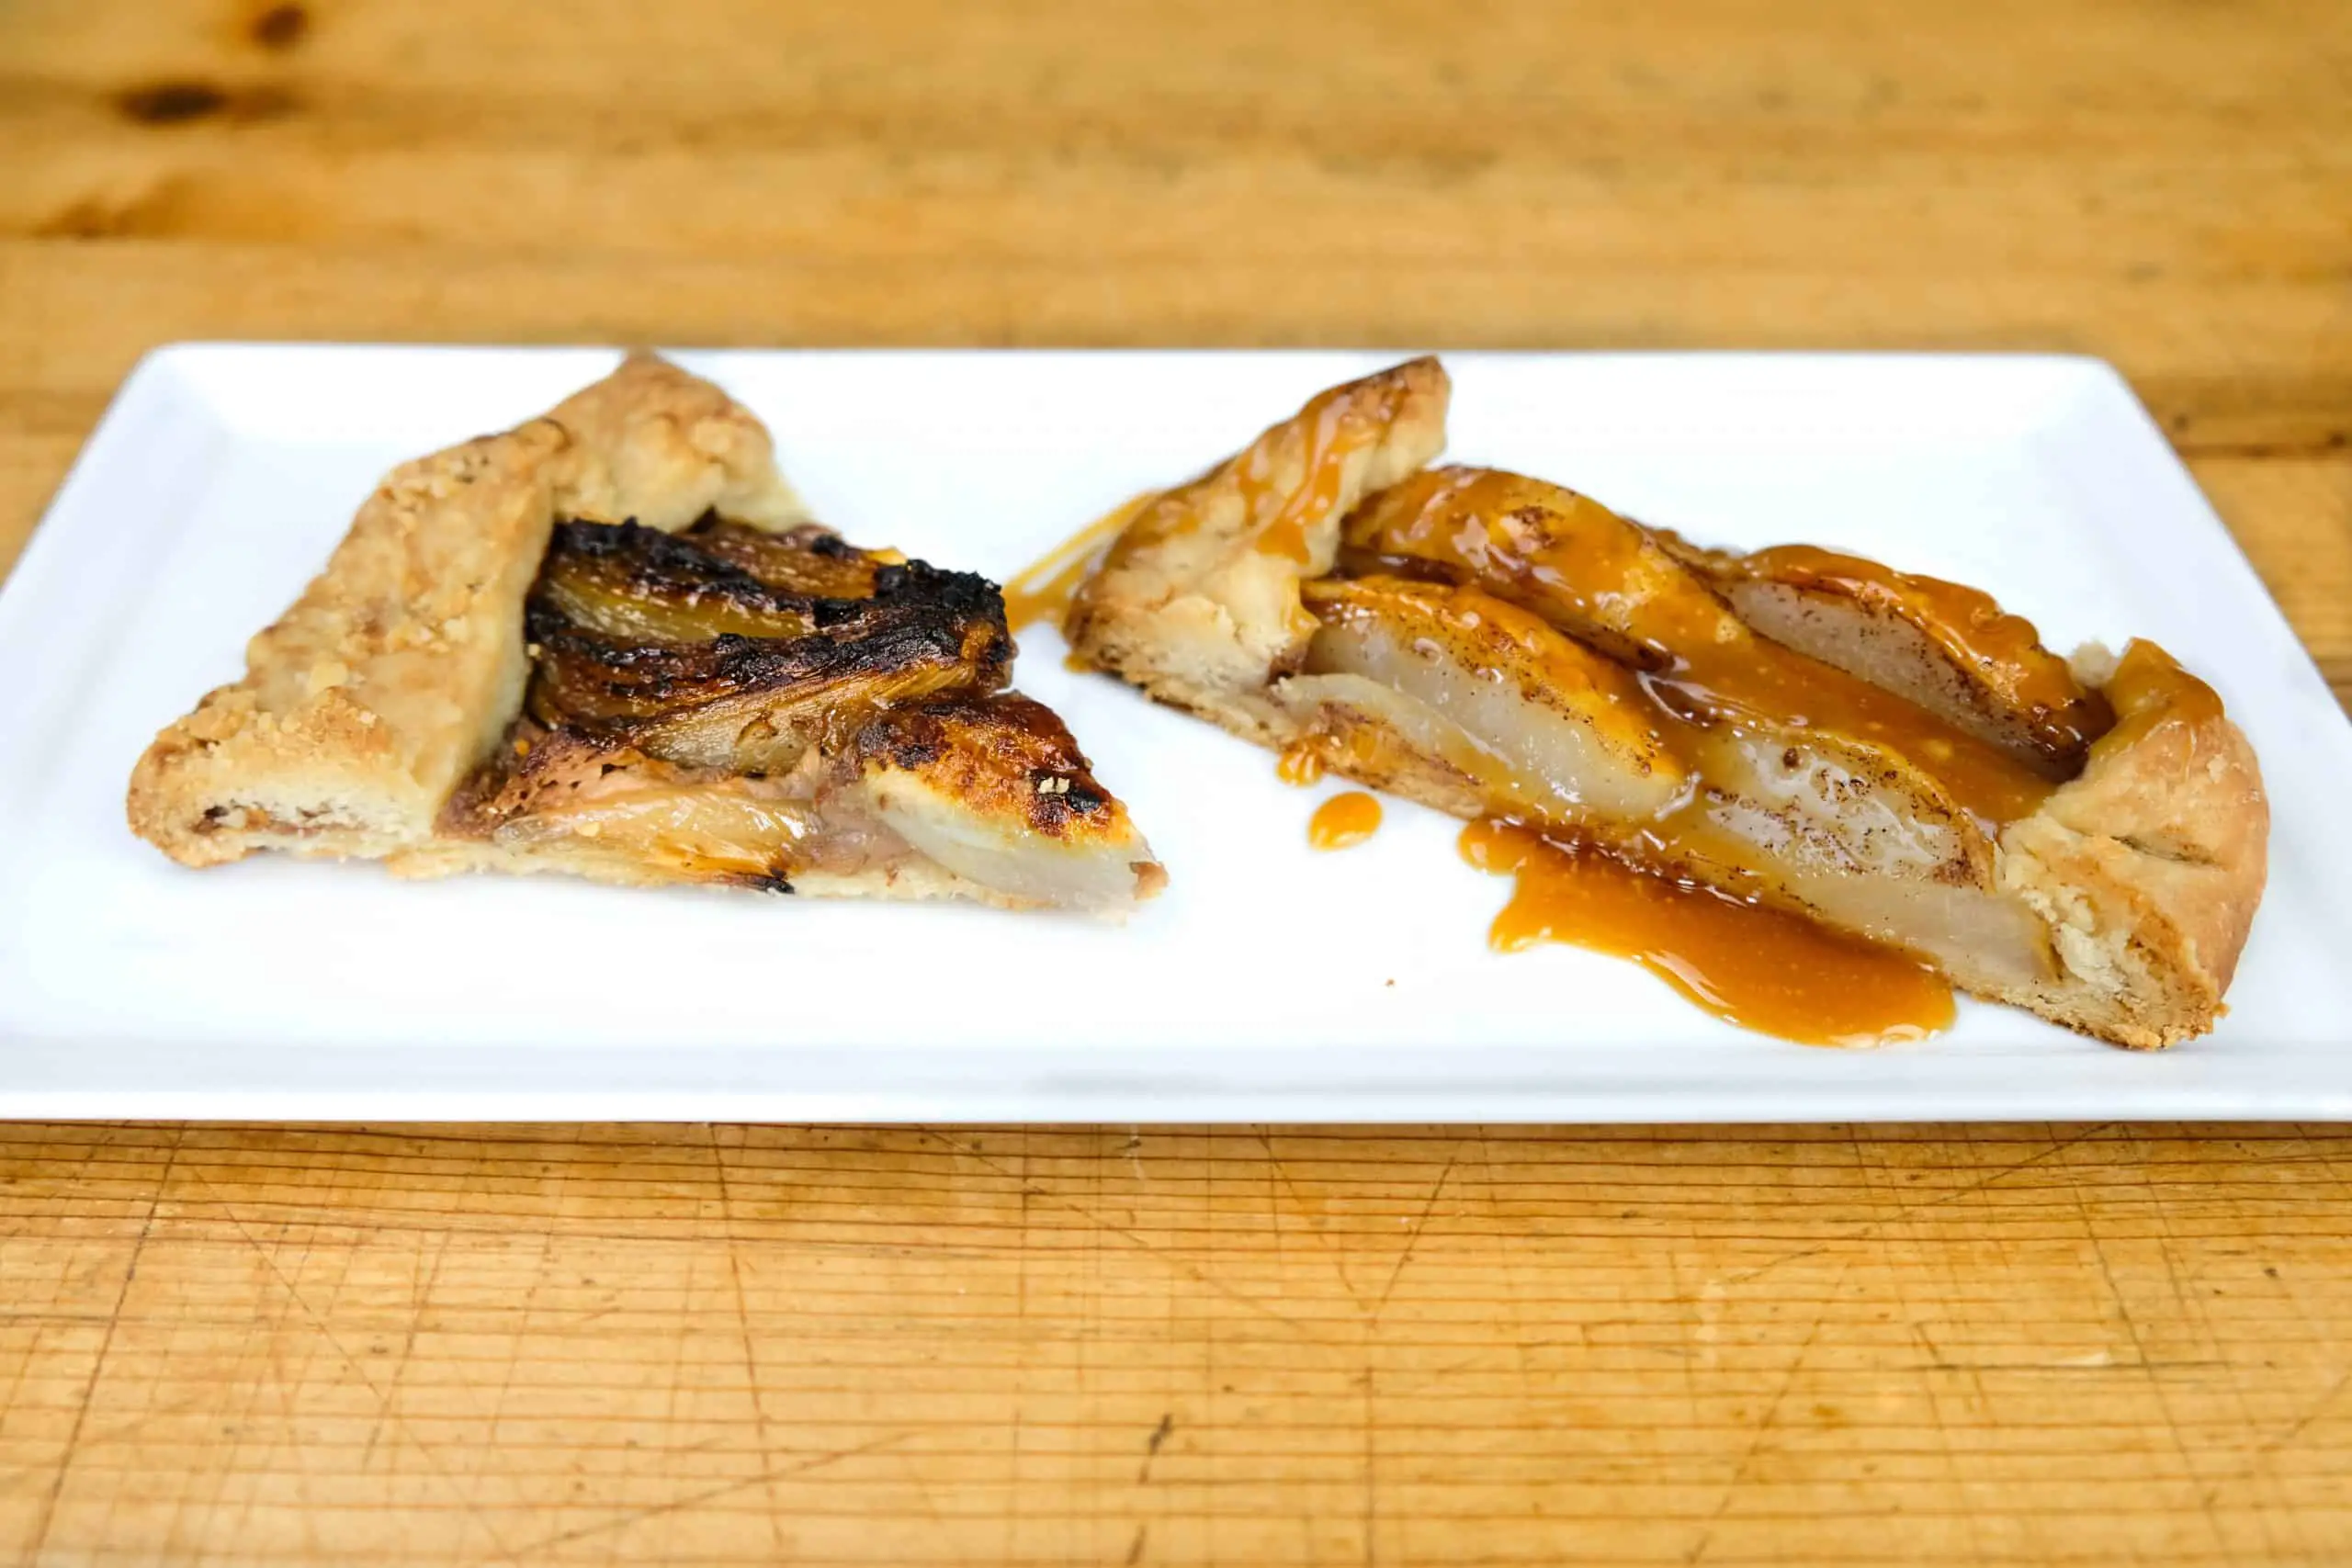 Crostata Recipes 2 Ways: Pear with Carmel Sauce – Miso Glazed Onion